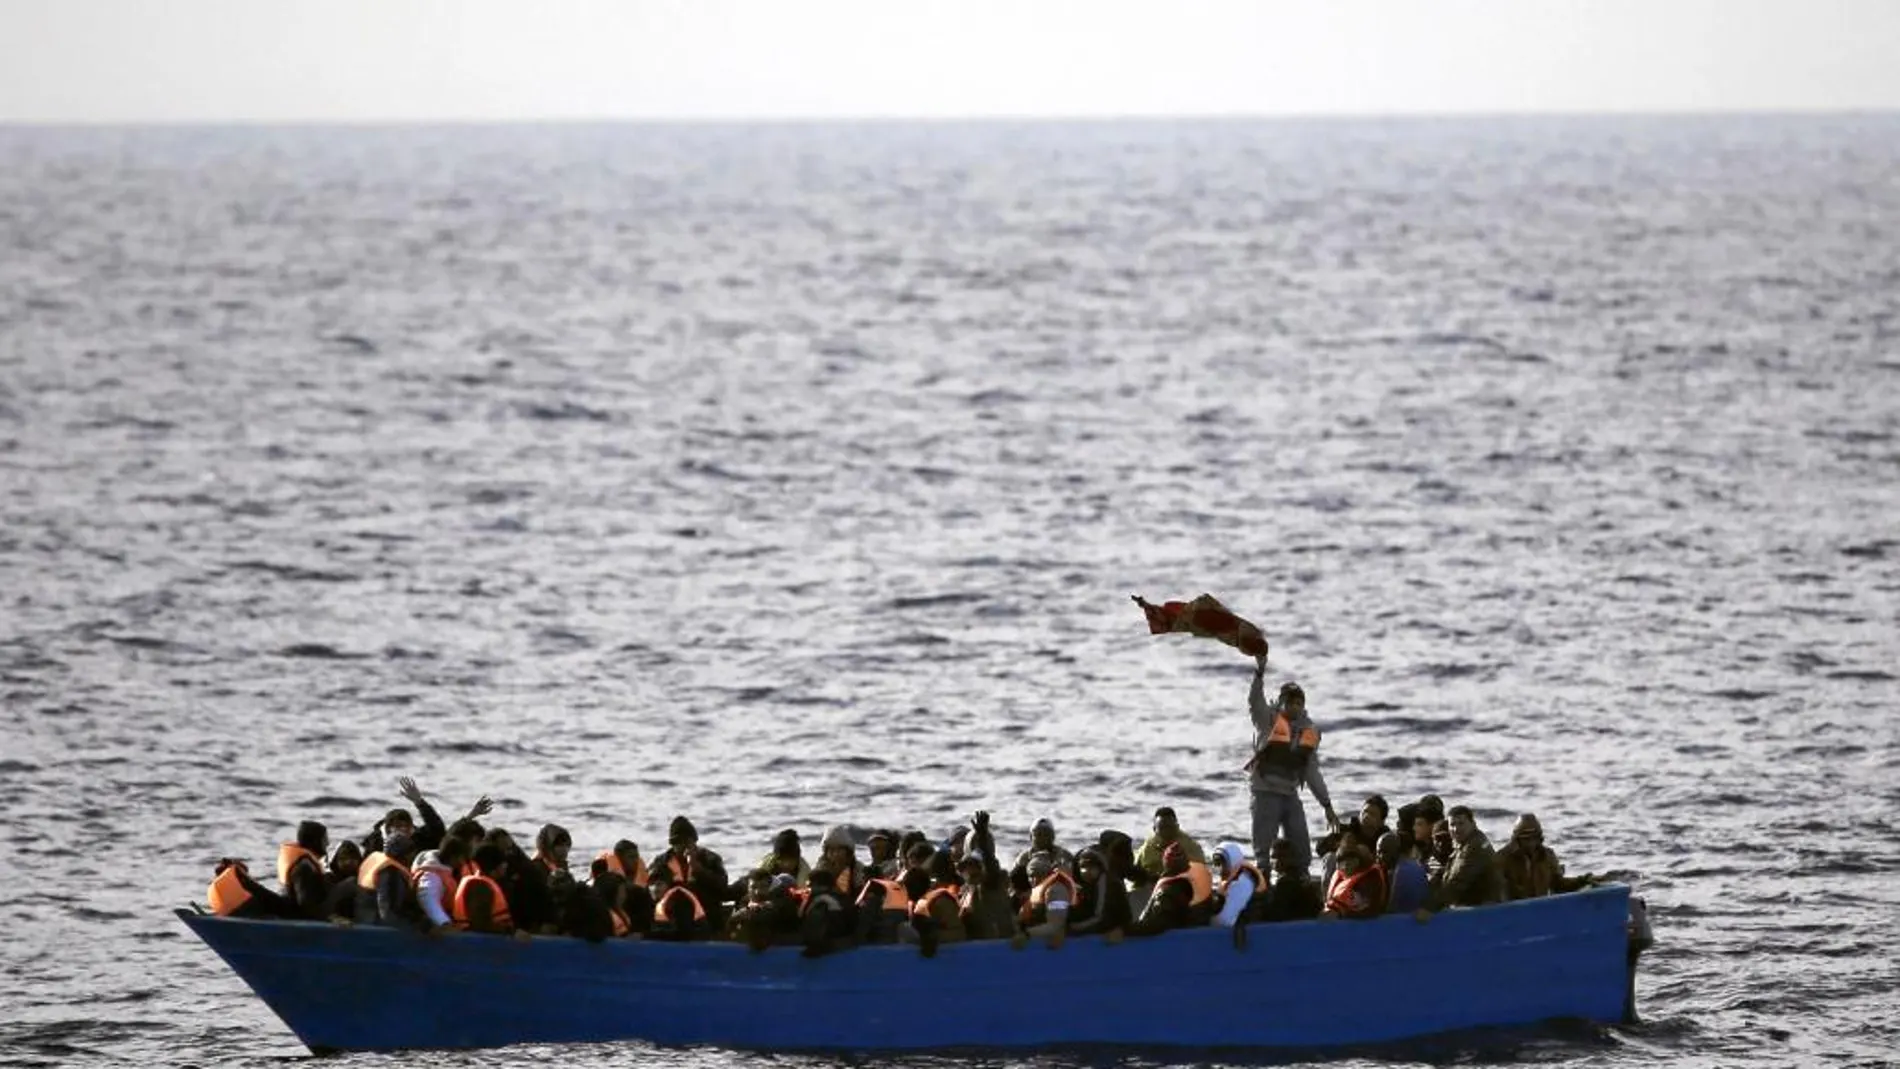 Una barca de madera llena de inmigrantes navega a la deriva en aguas libias